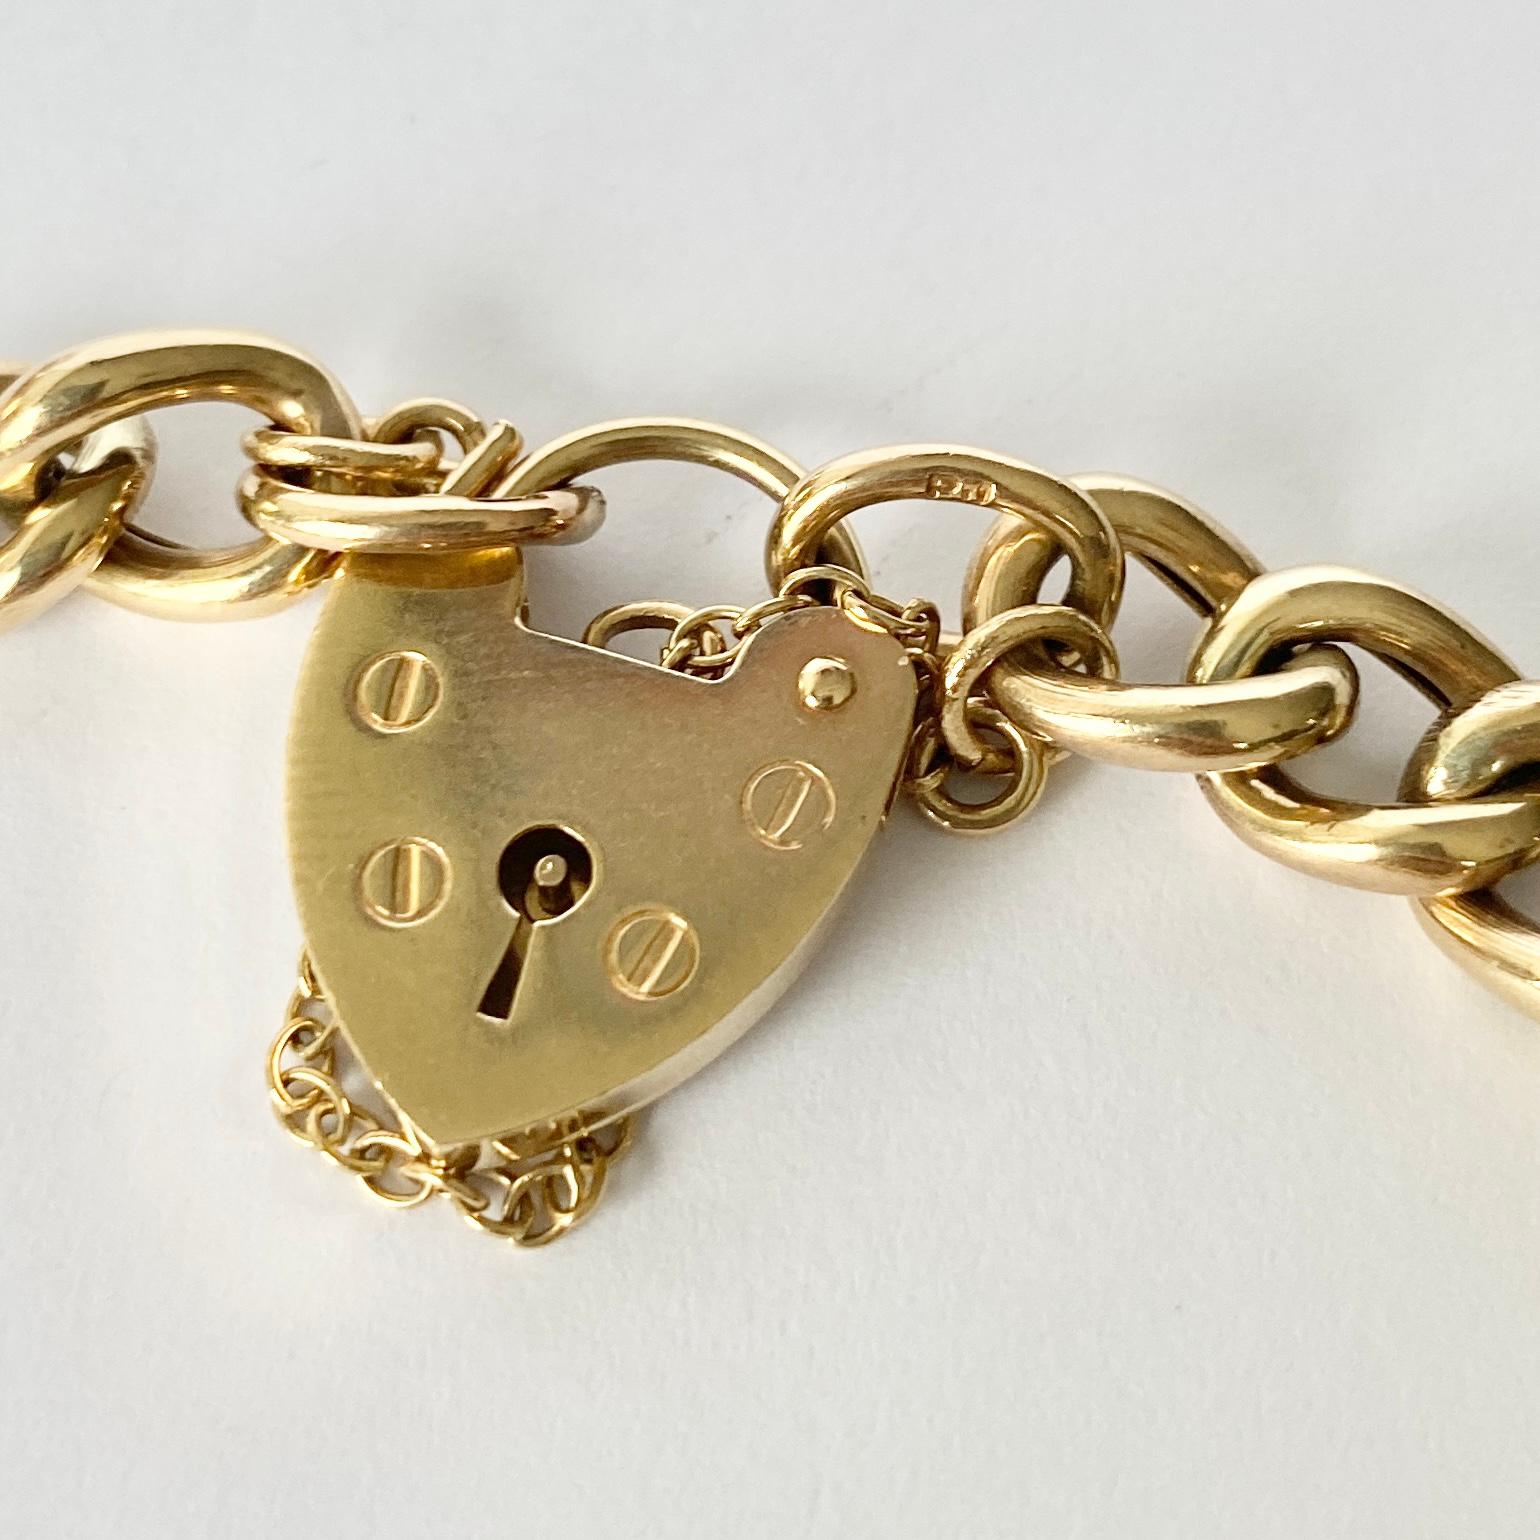 9 carat gold bracelet